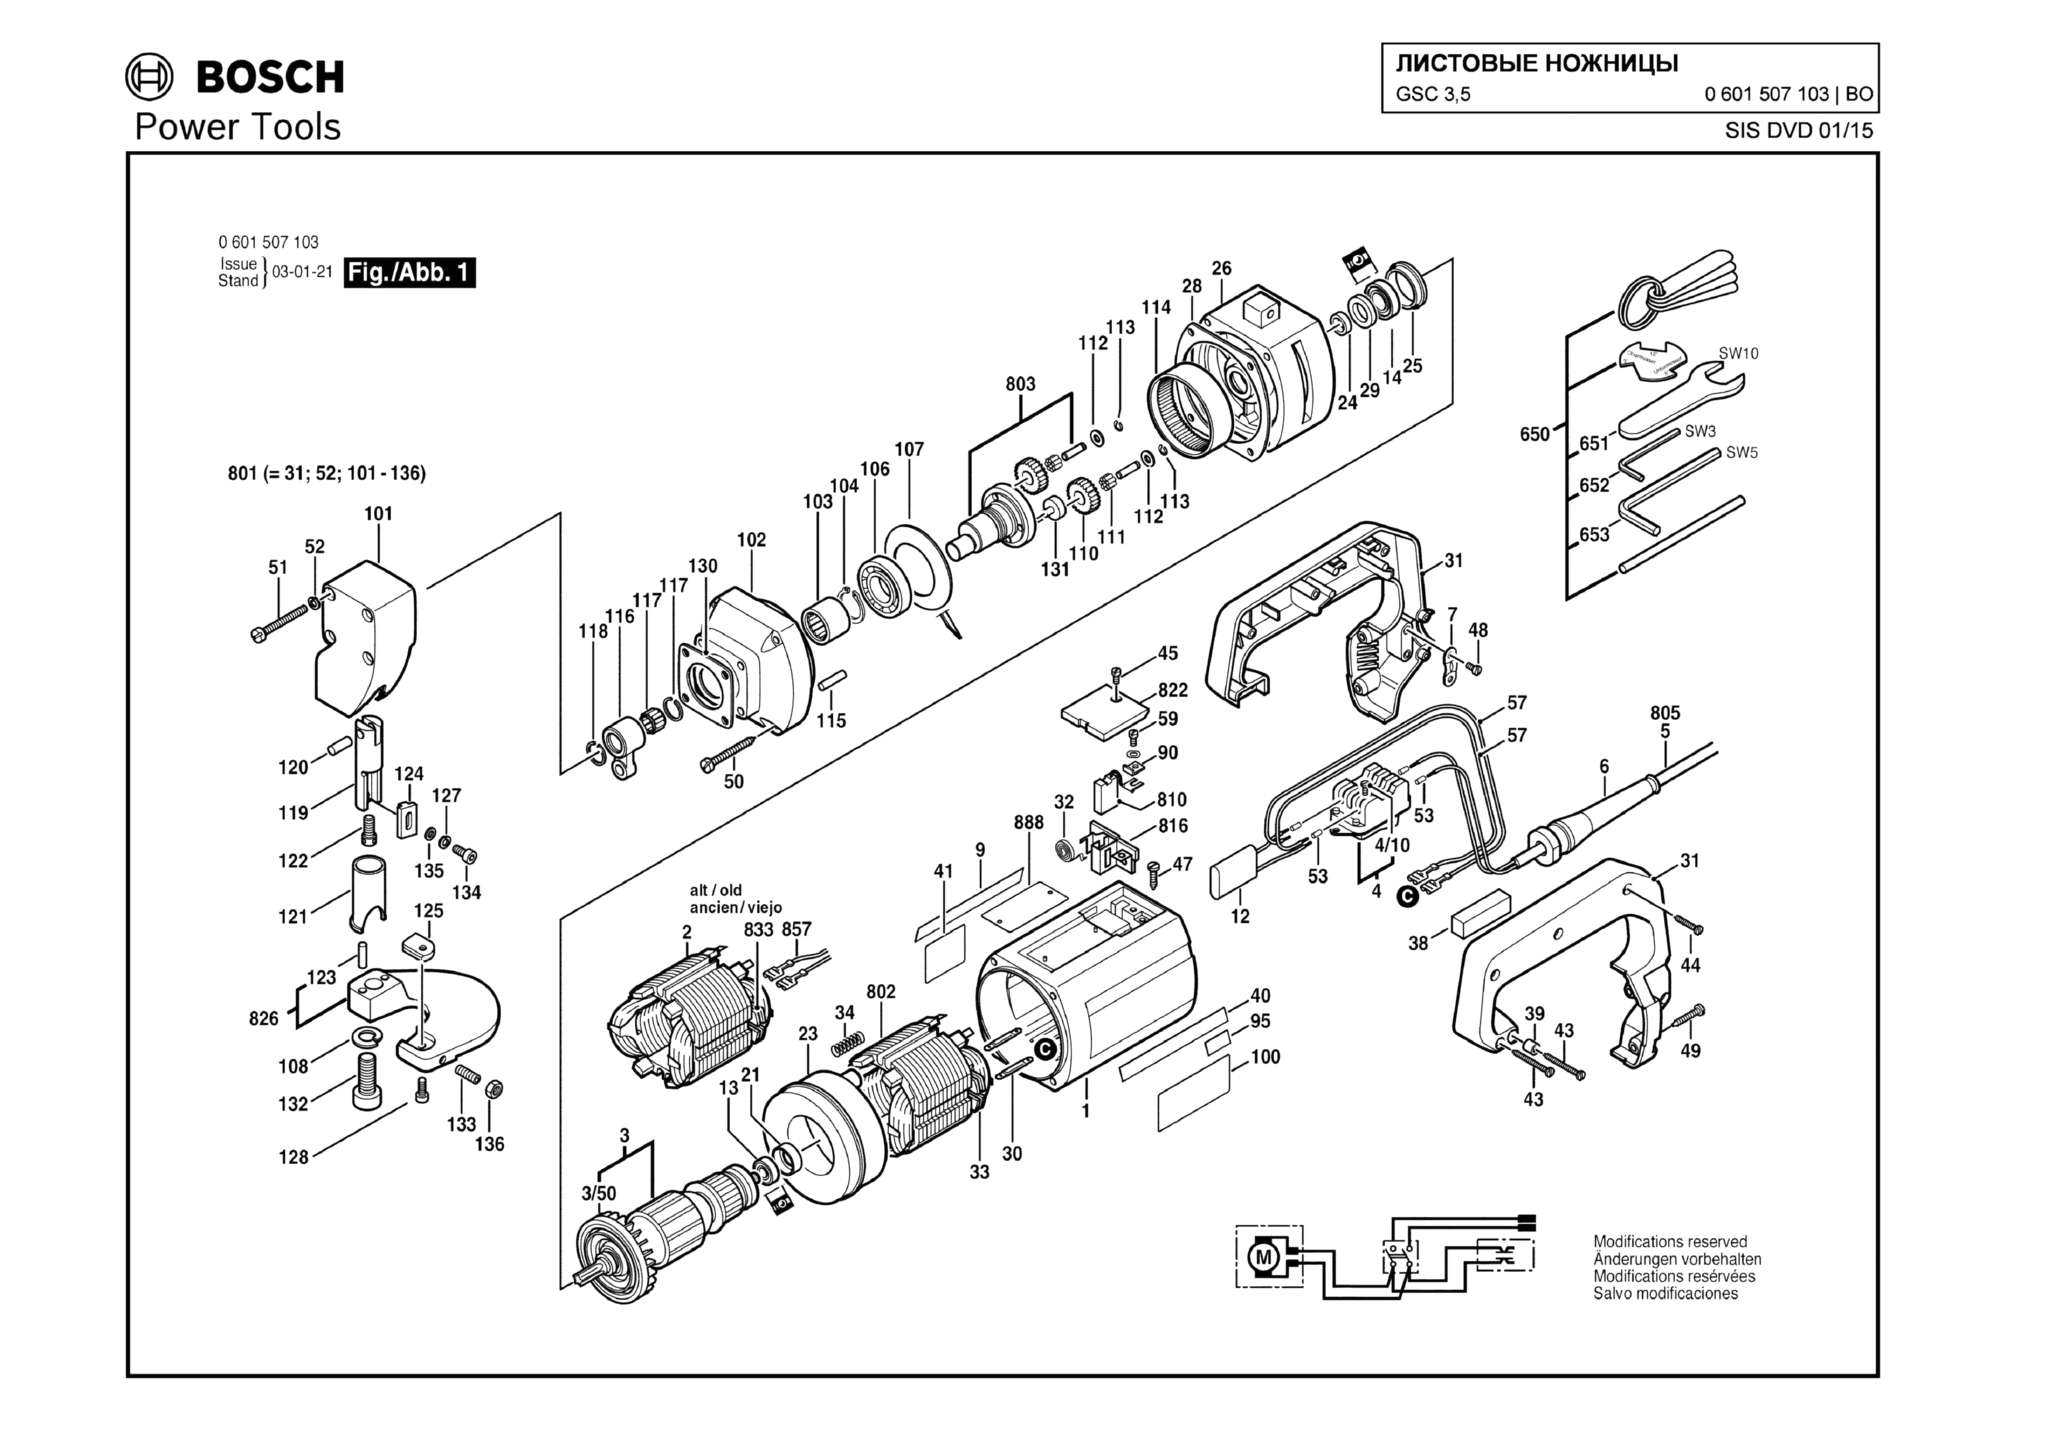 Запчасти, схема и деталировка Bosch GSC 3,5 (ТИП 0601507103)